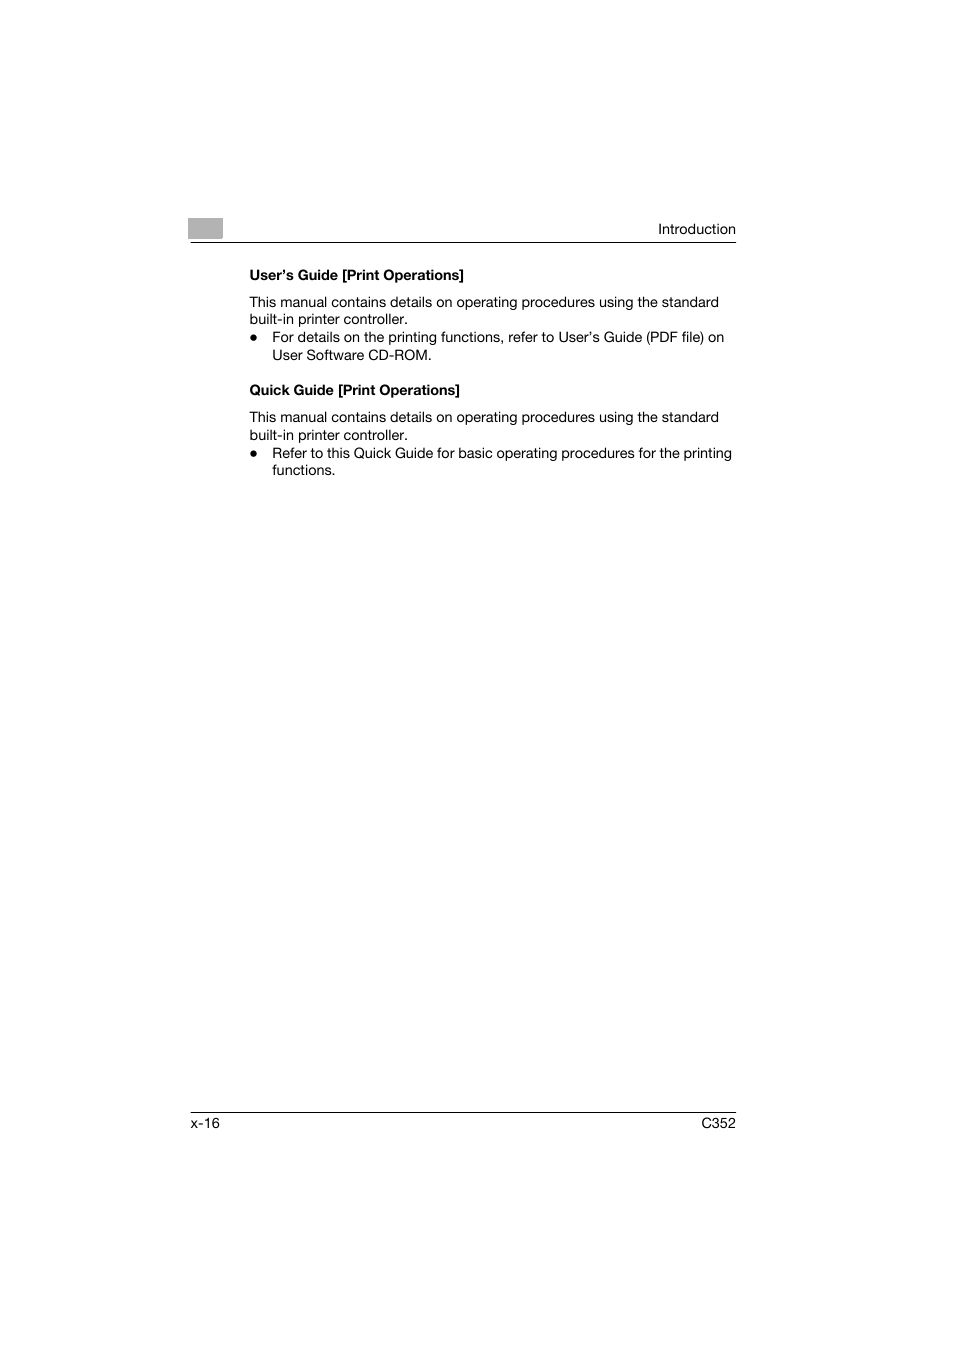 User’s guide [print operations, Quick guide [print operations | Konica Minolta bizhub C352 User Manual | Page 17 / 198